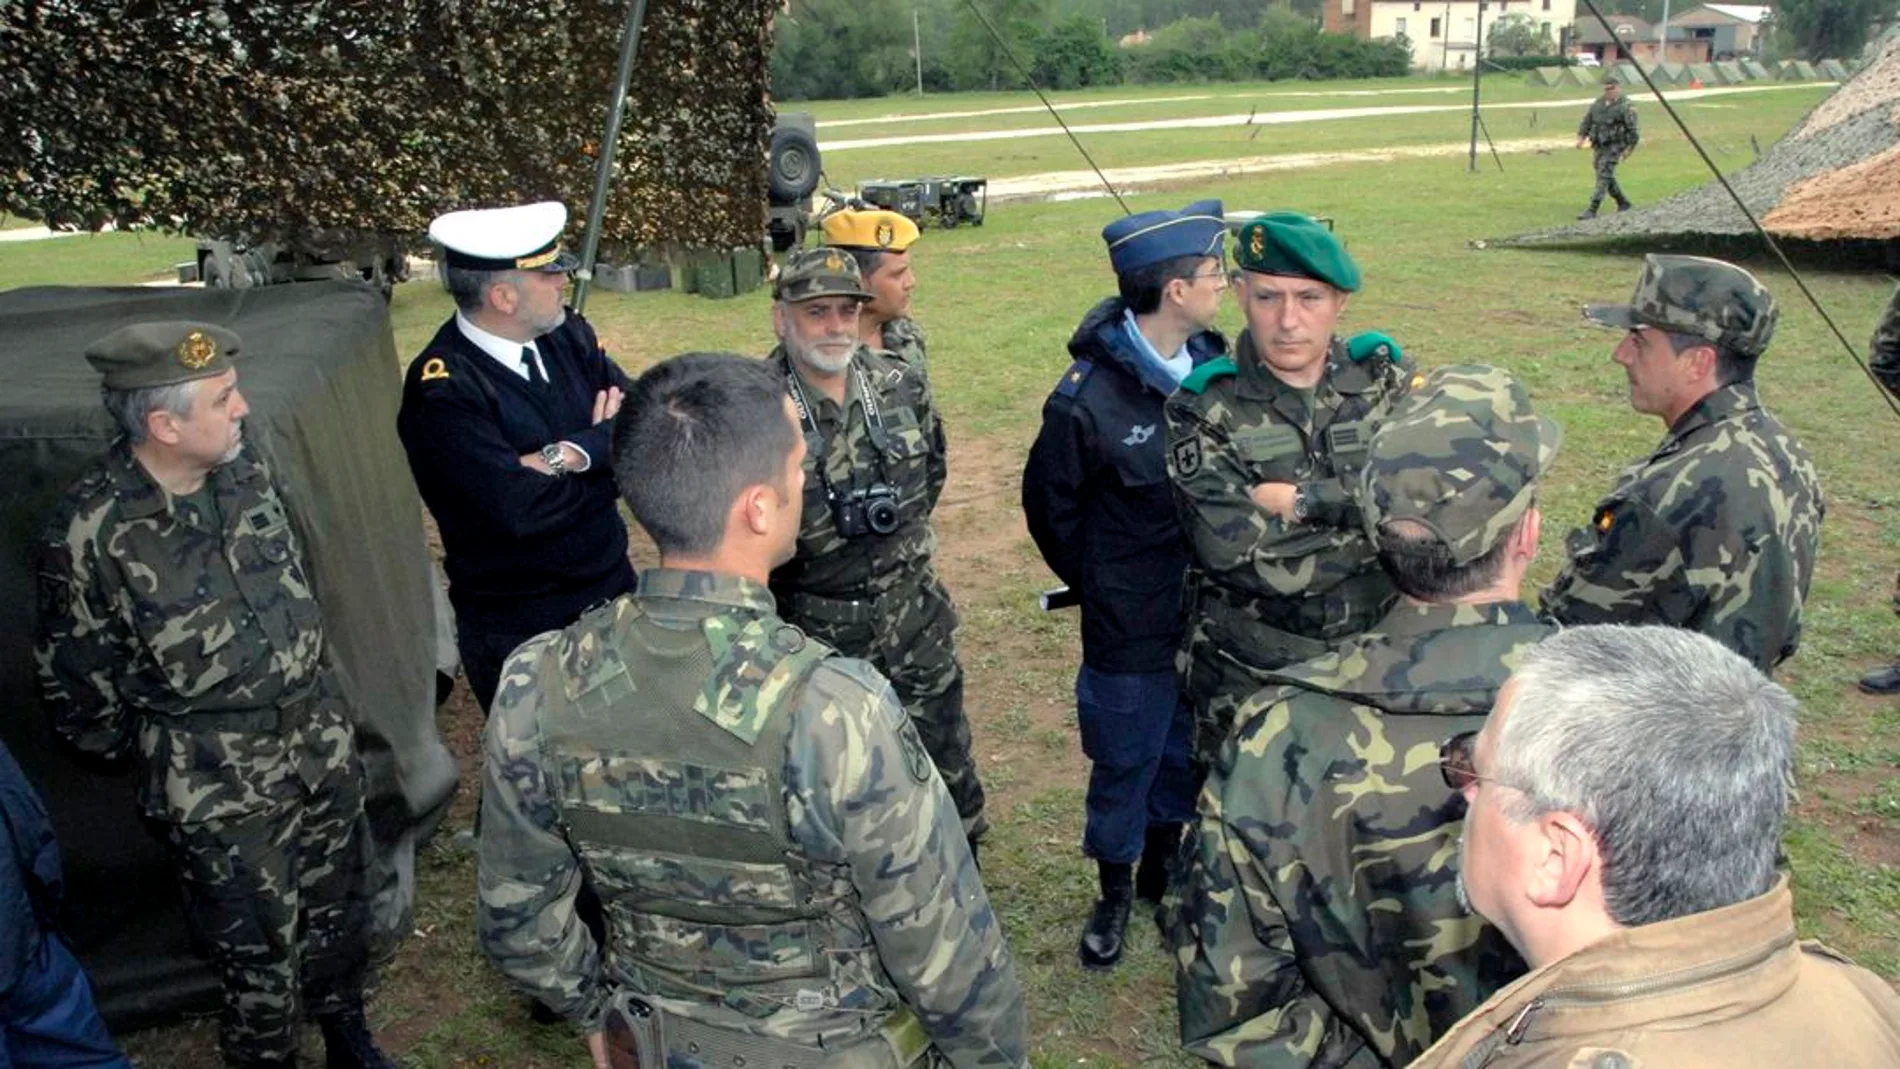 Grupo de reservistas voluntarios de diferentes unidades militares españolas